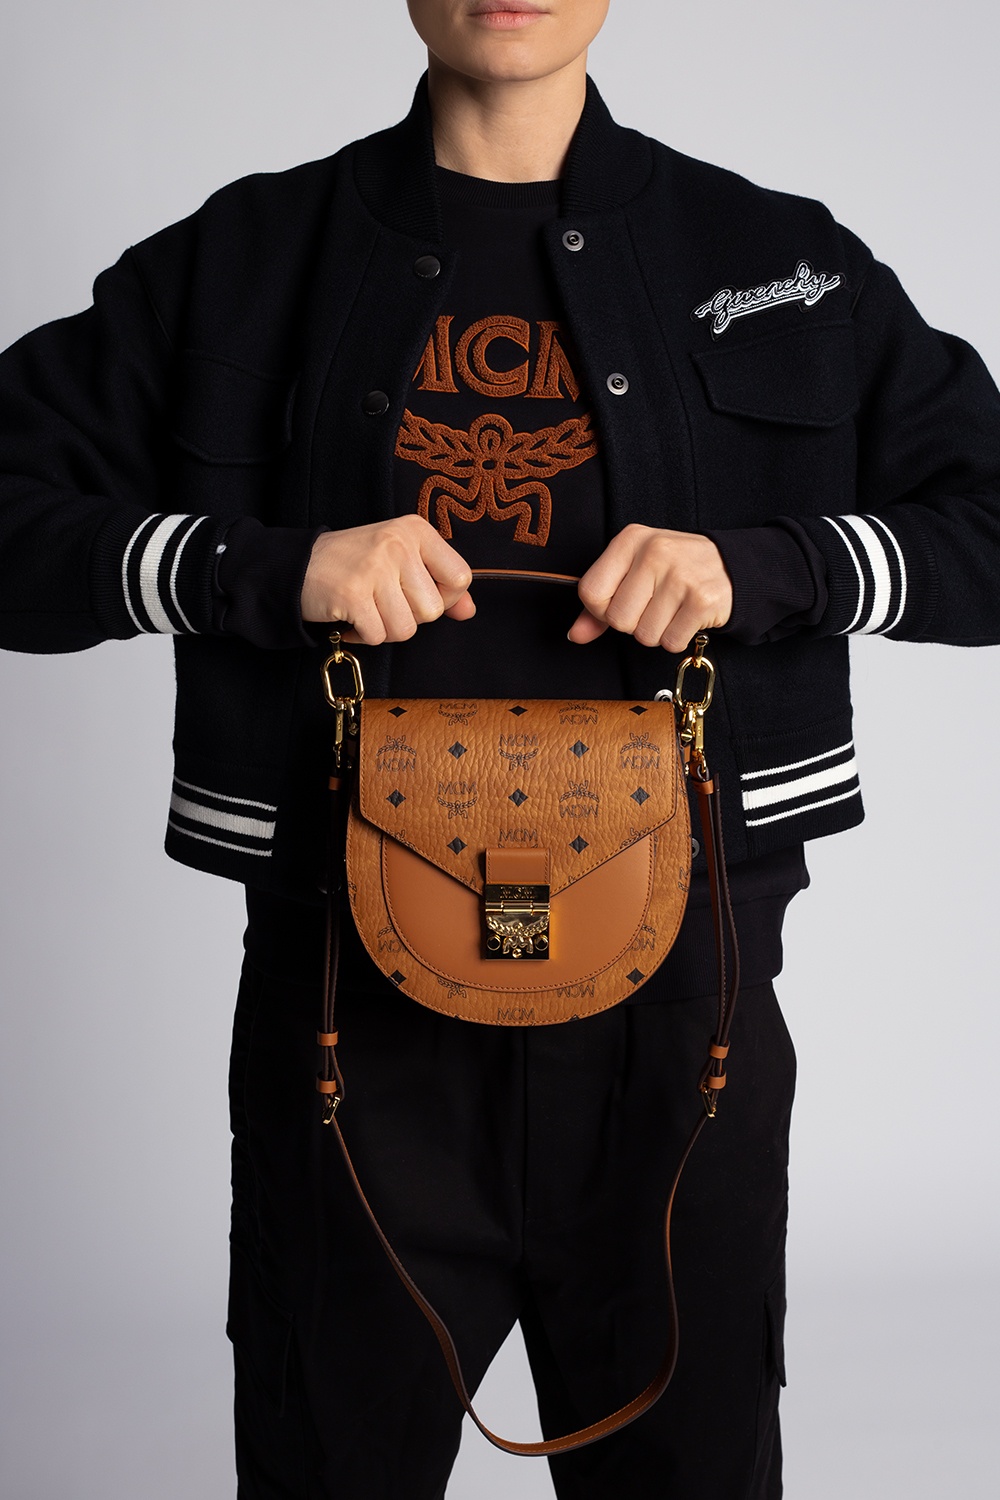 MCM Patricia Monogram Convertible Leather Belt Bag on SALE